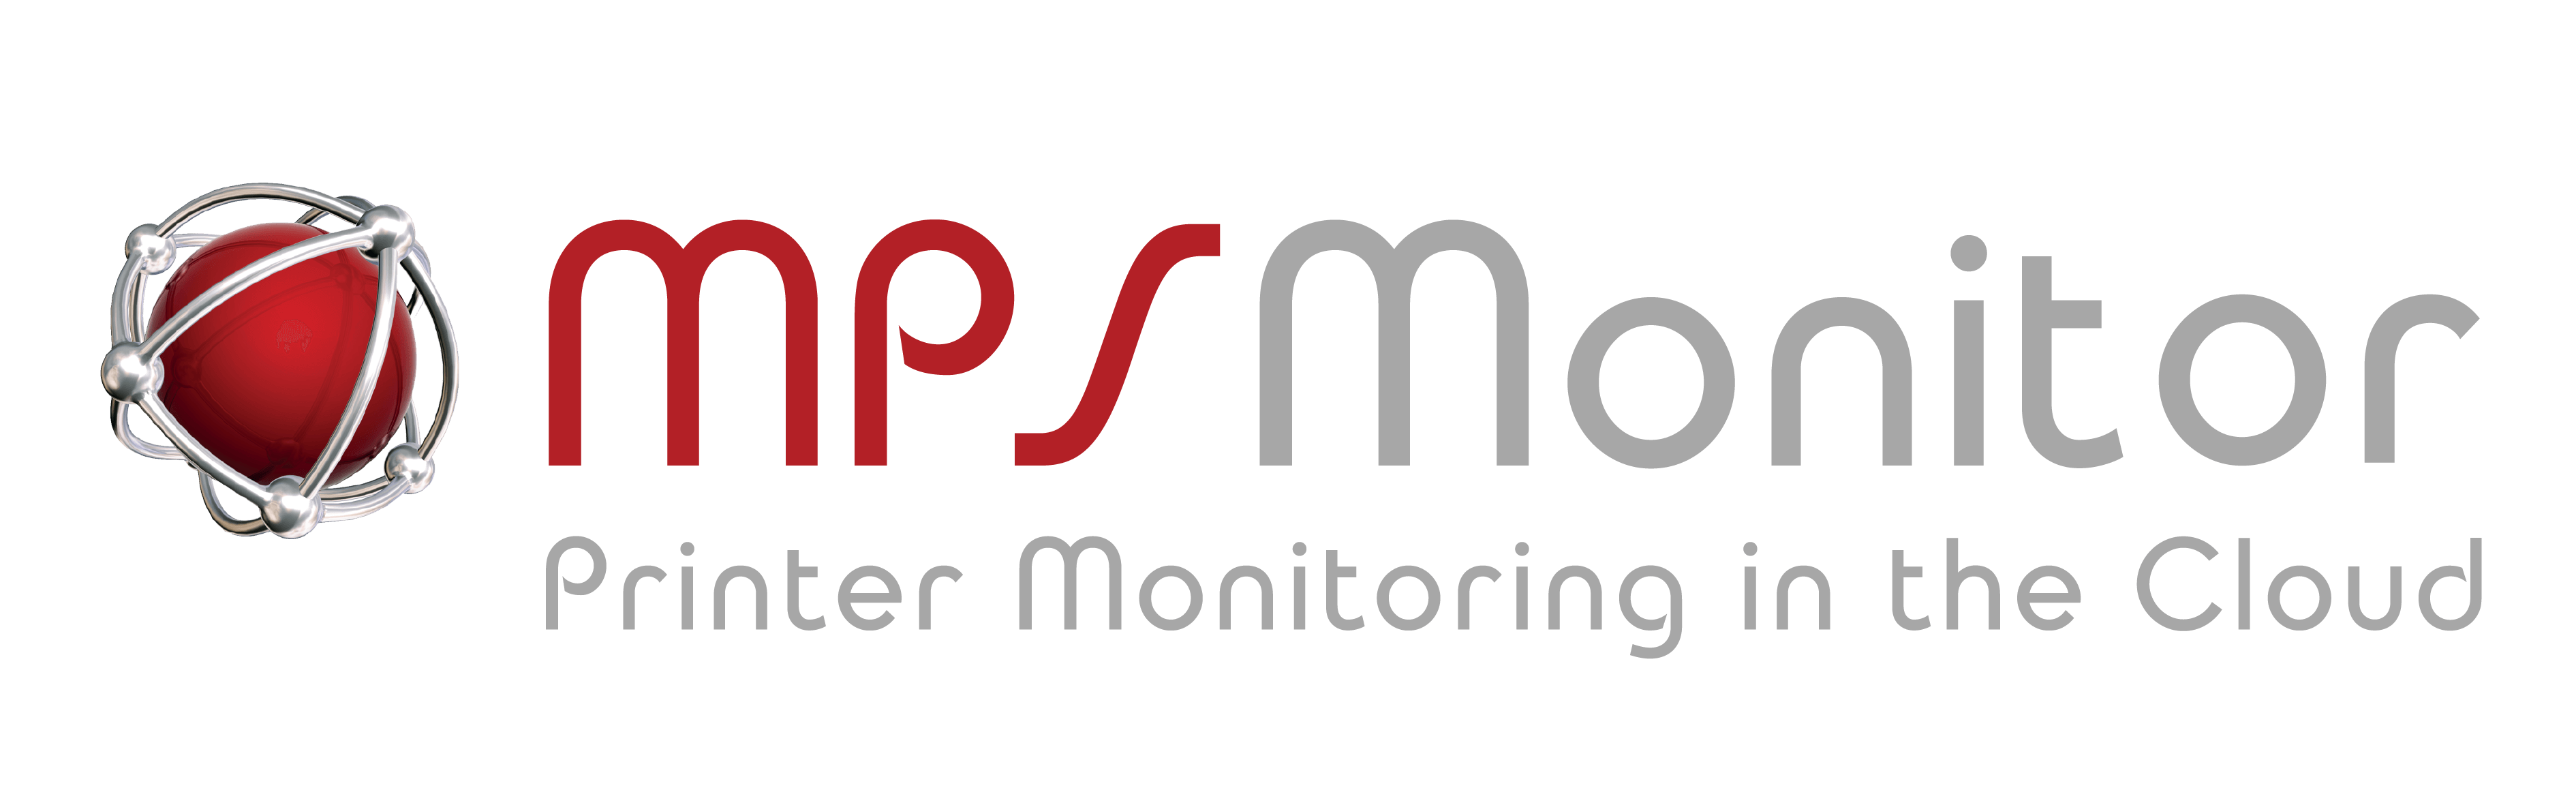 logo_mpsmonitor-printer-monitoring-in-the-cloud-def